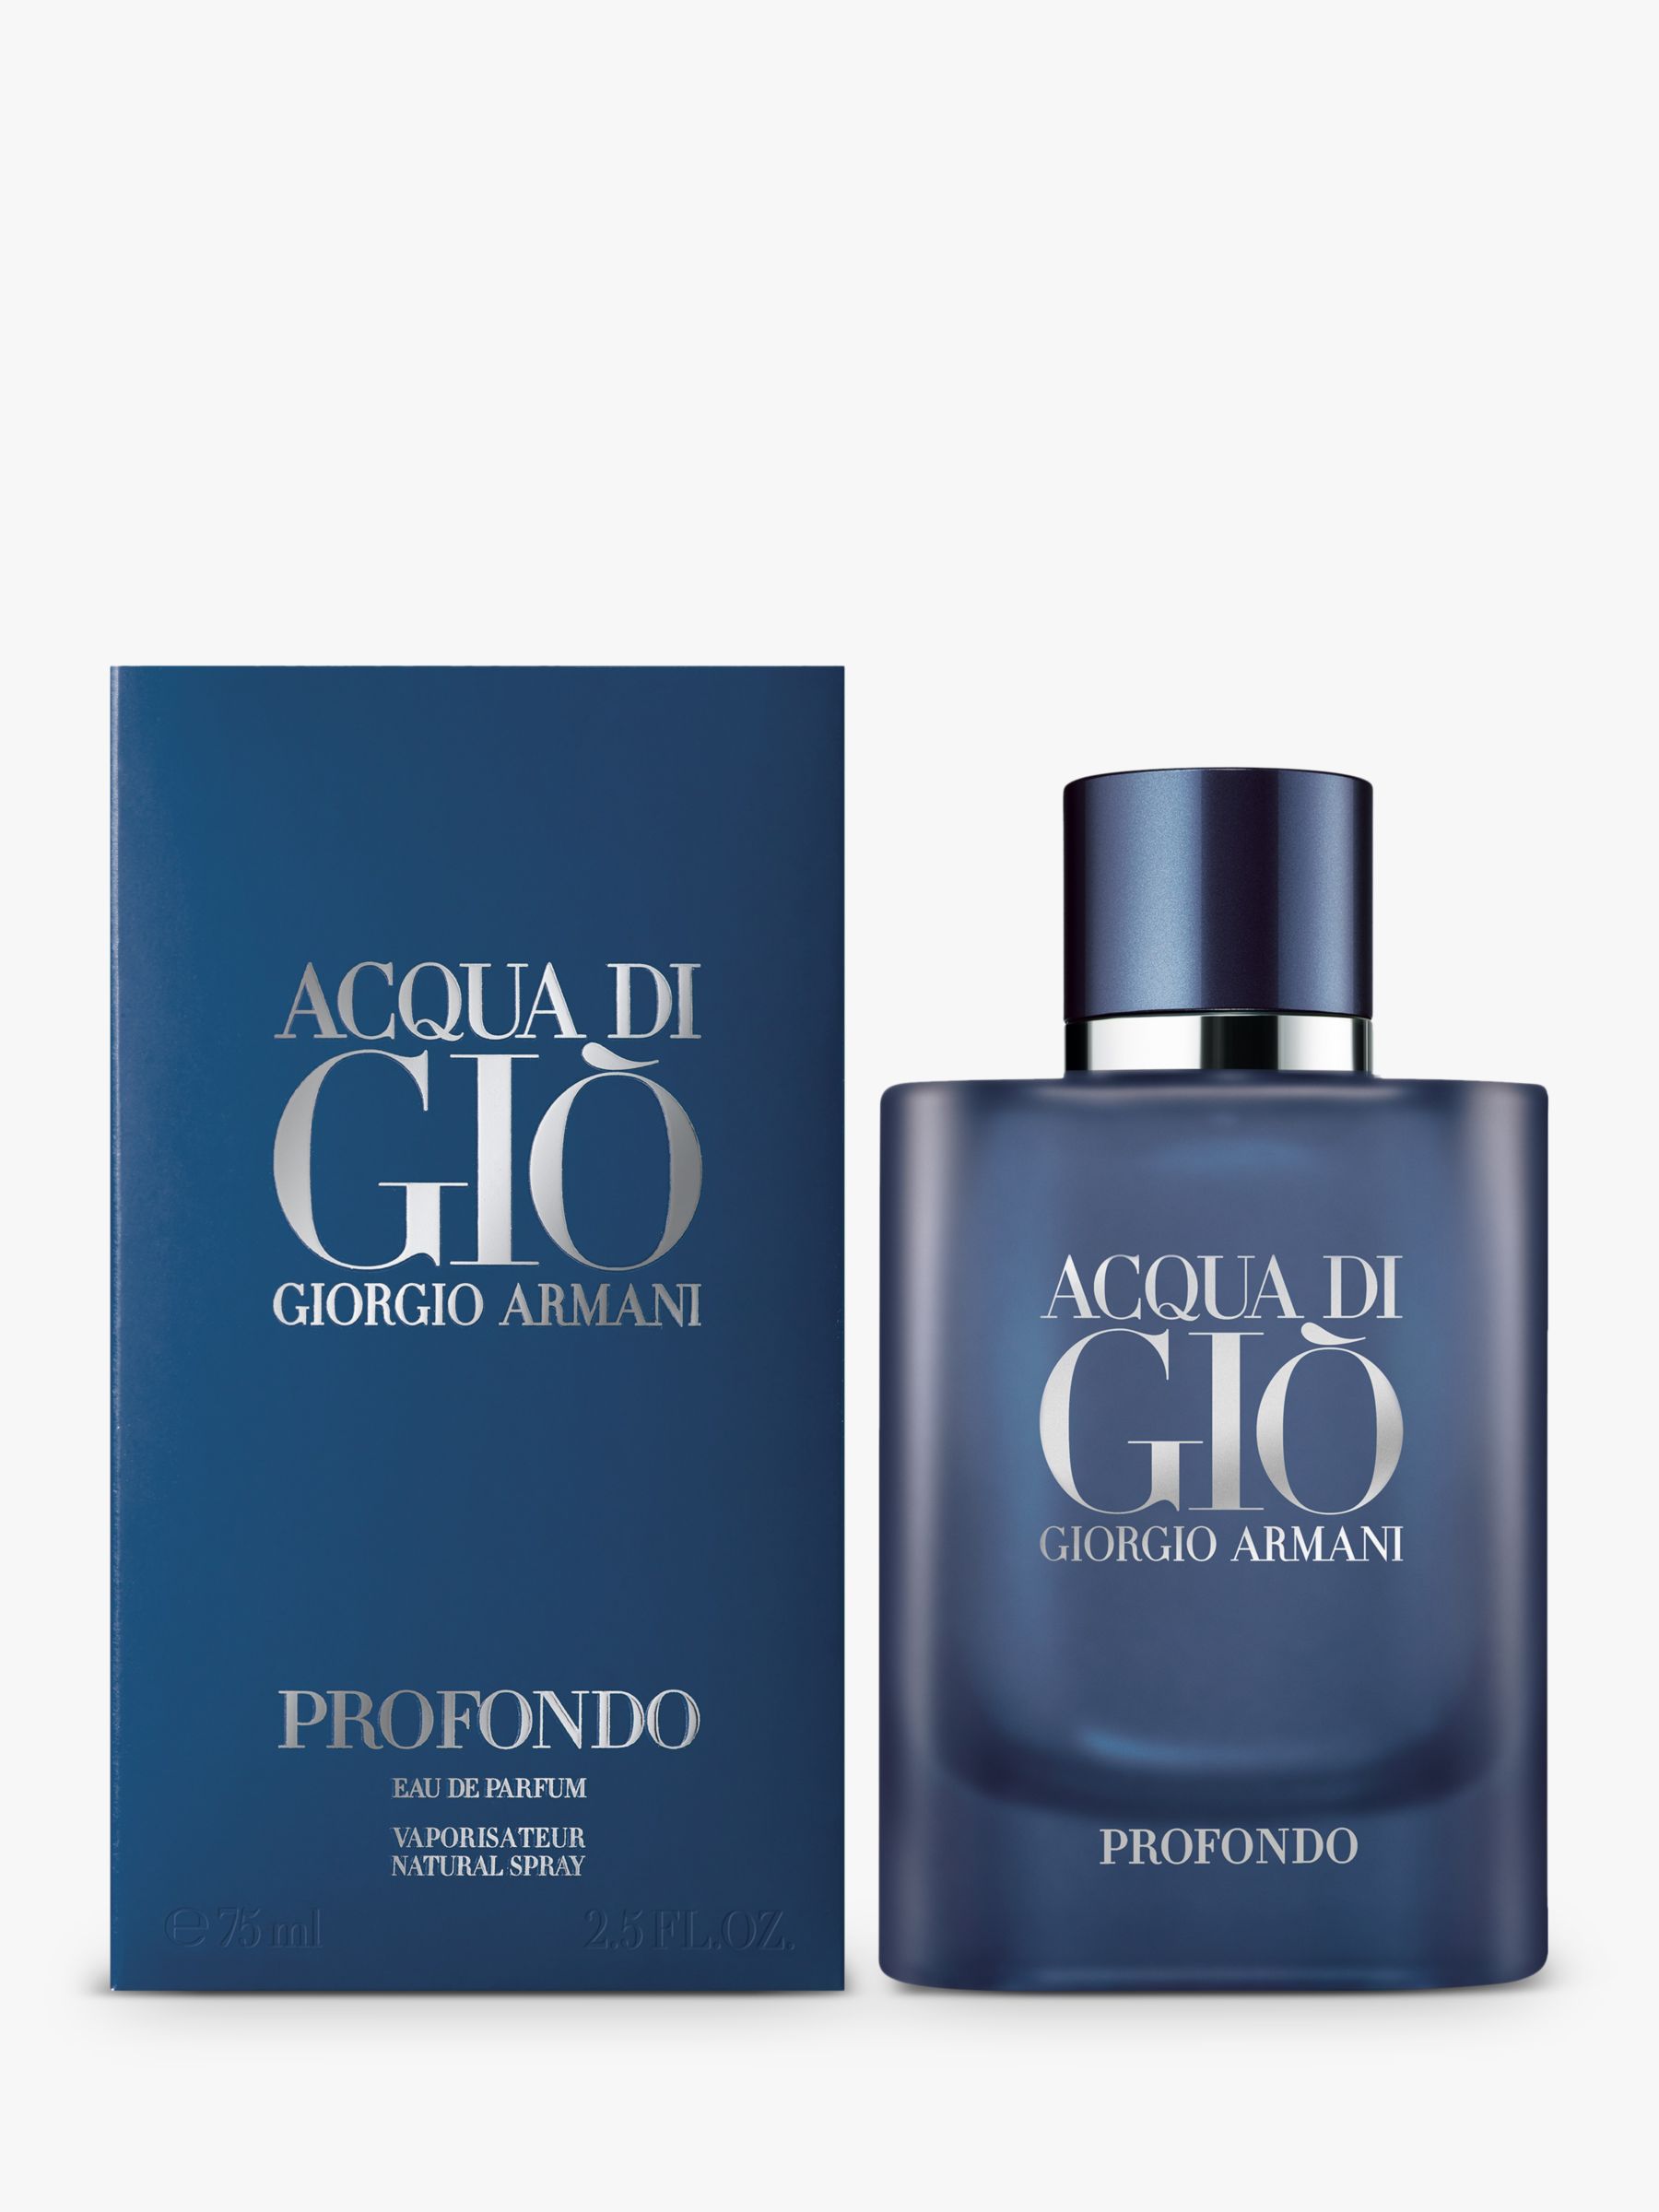 Giorgio Armani Acqua di Giò Profondo Eau de Parfum, 75ml at John Lewis &  Partners